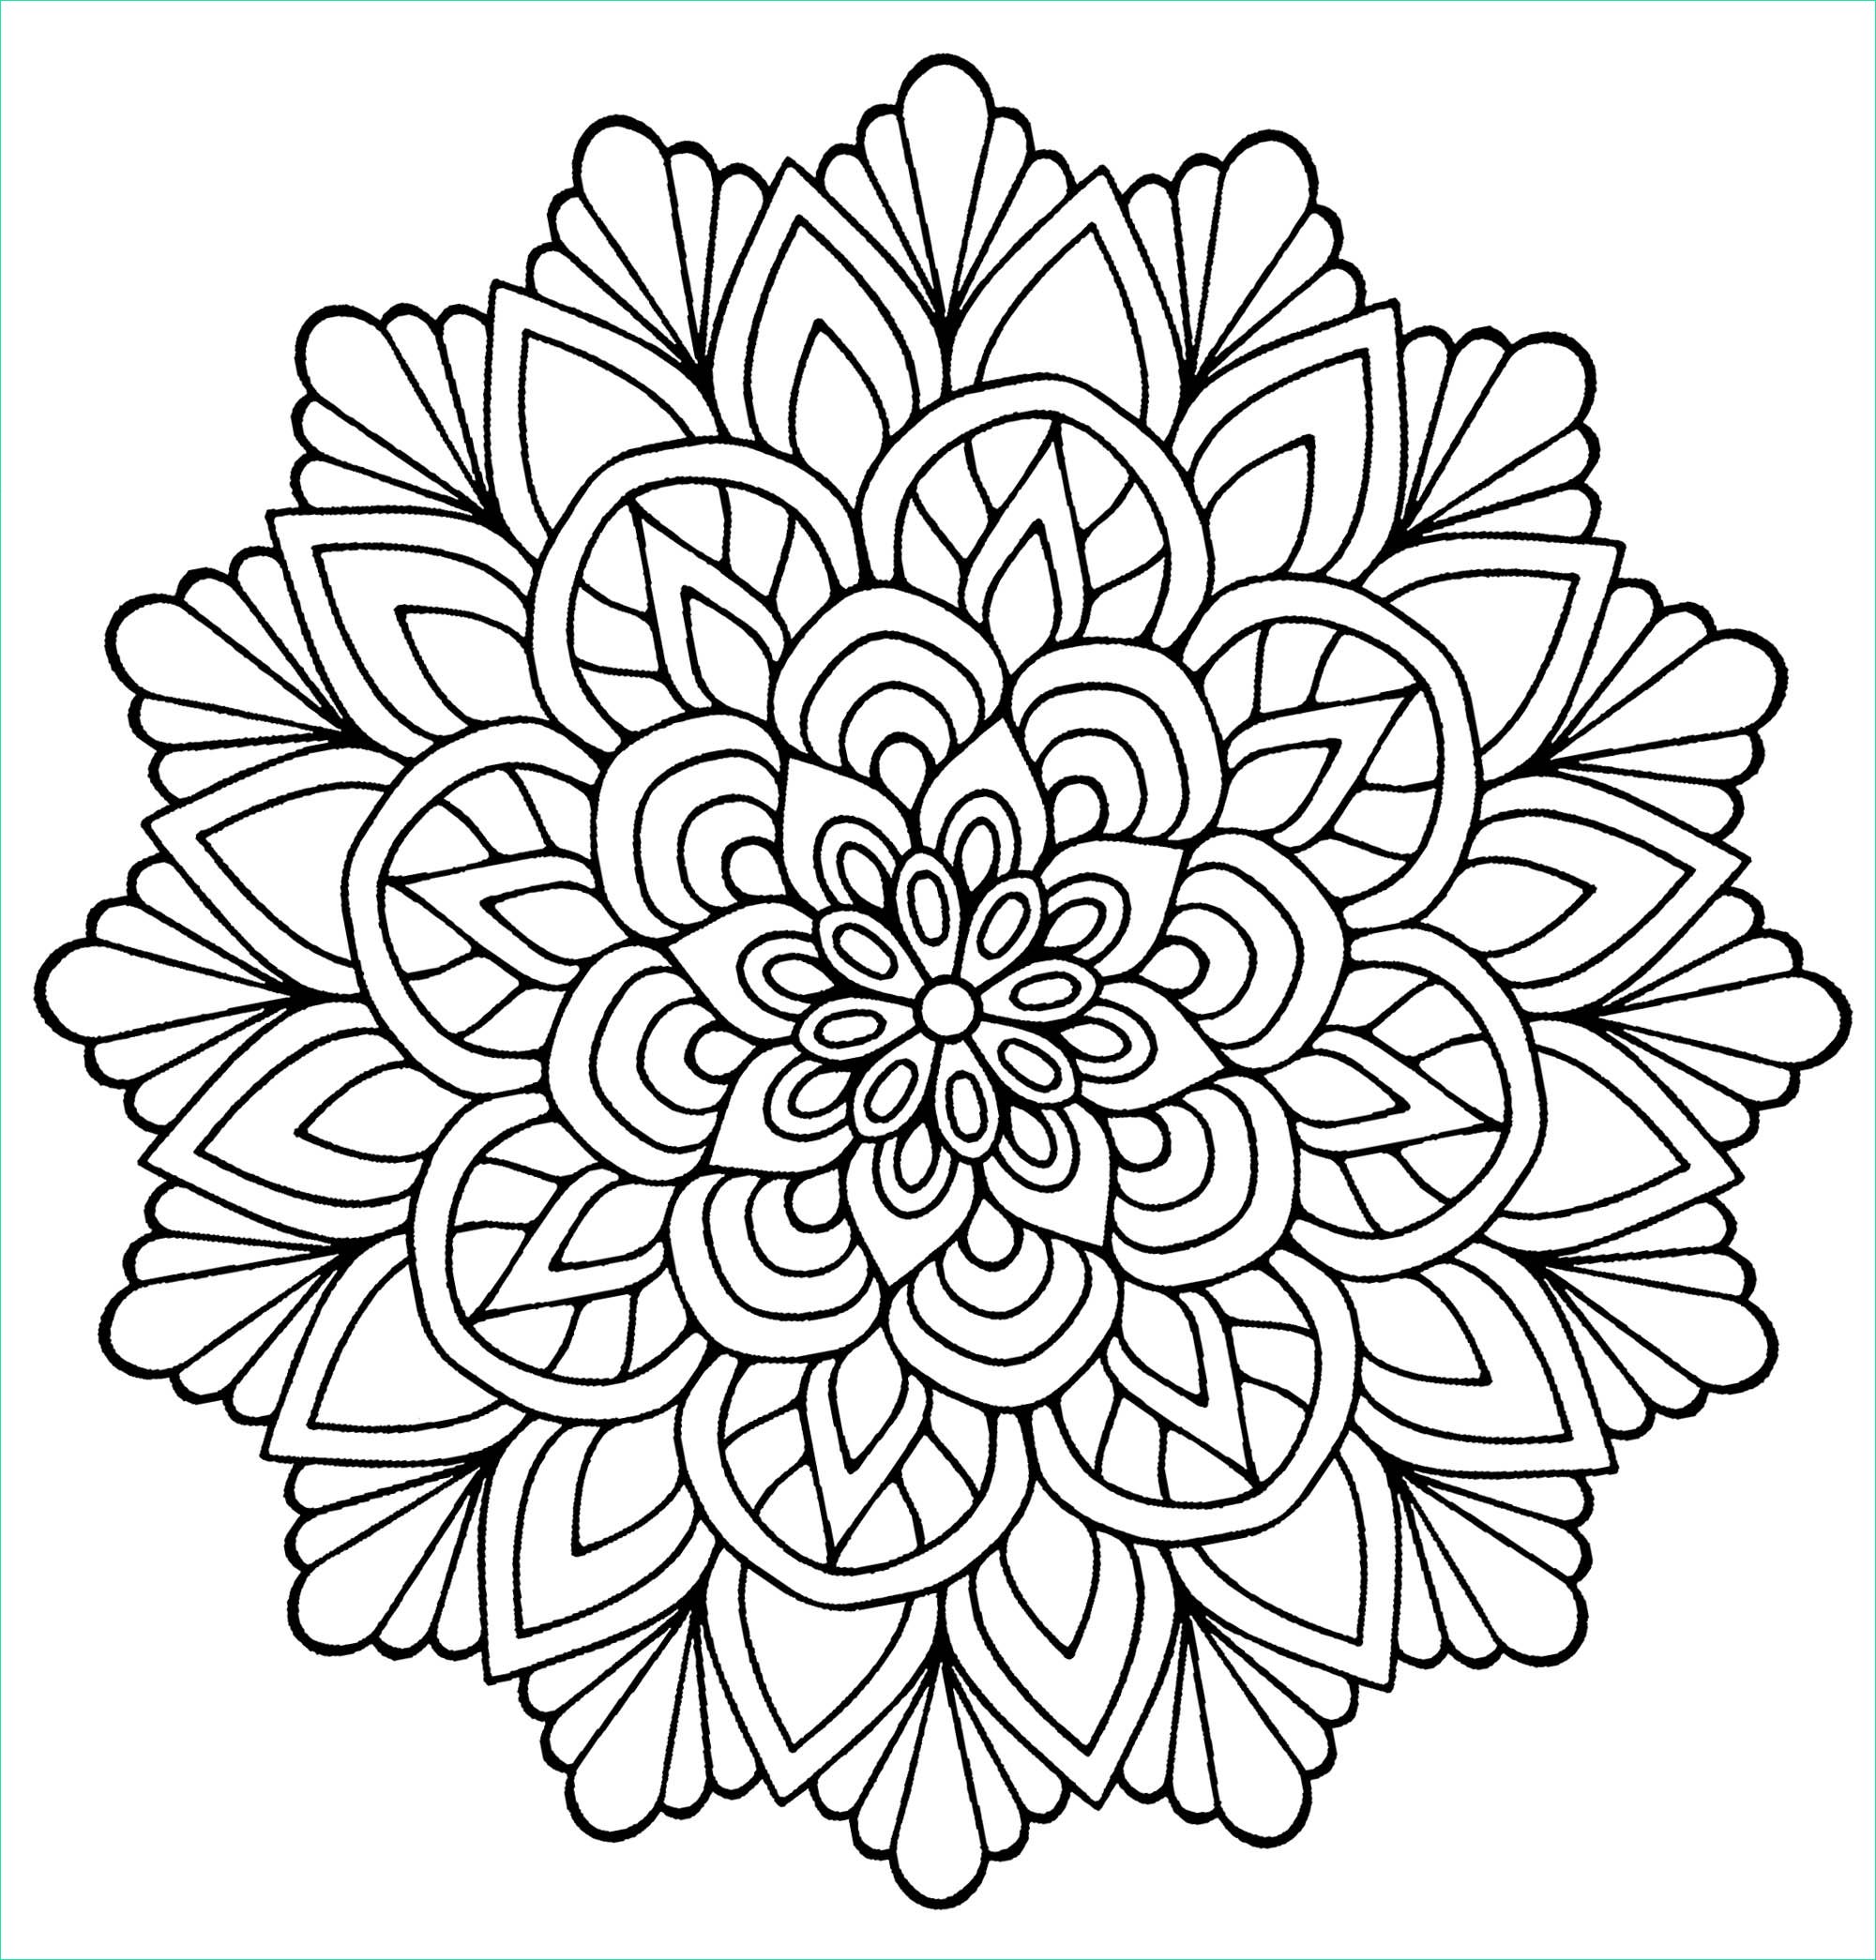 image=mandalas mandala flower with leaves 1